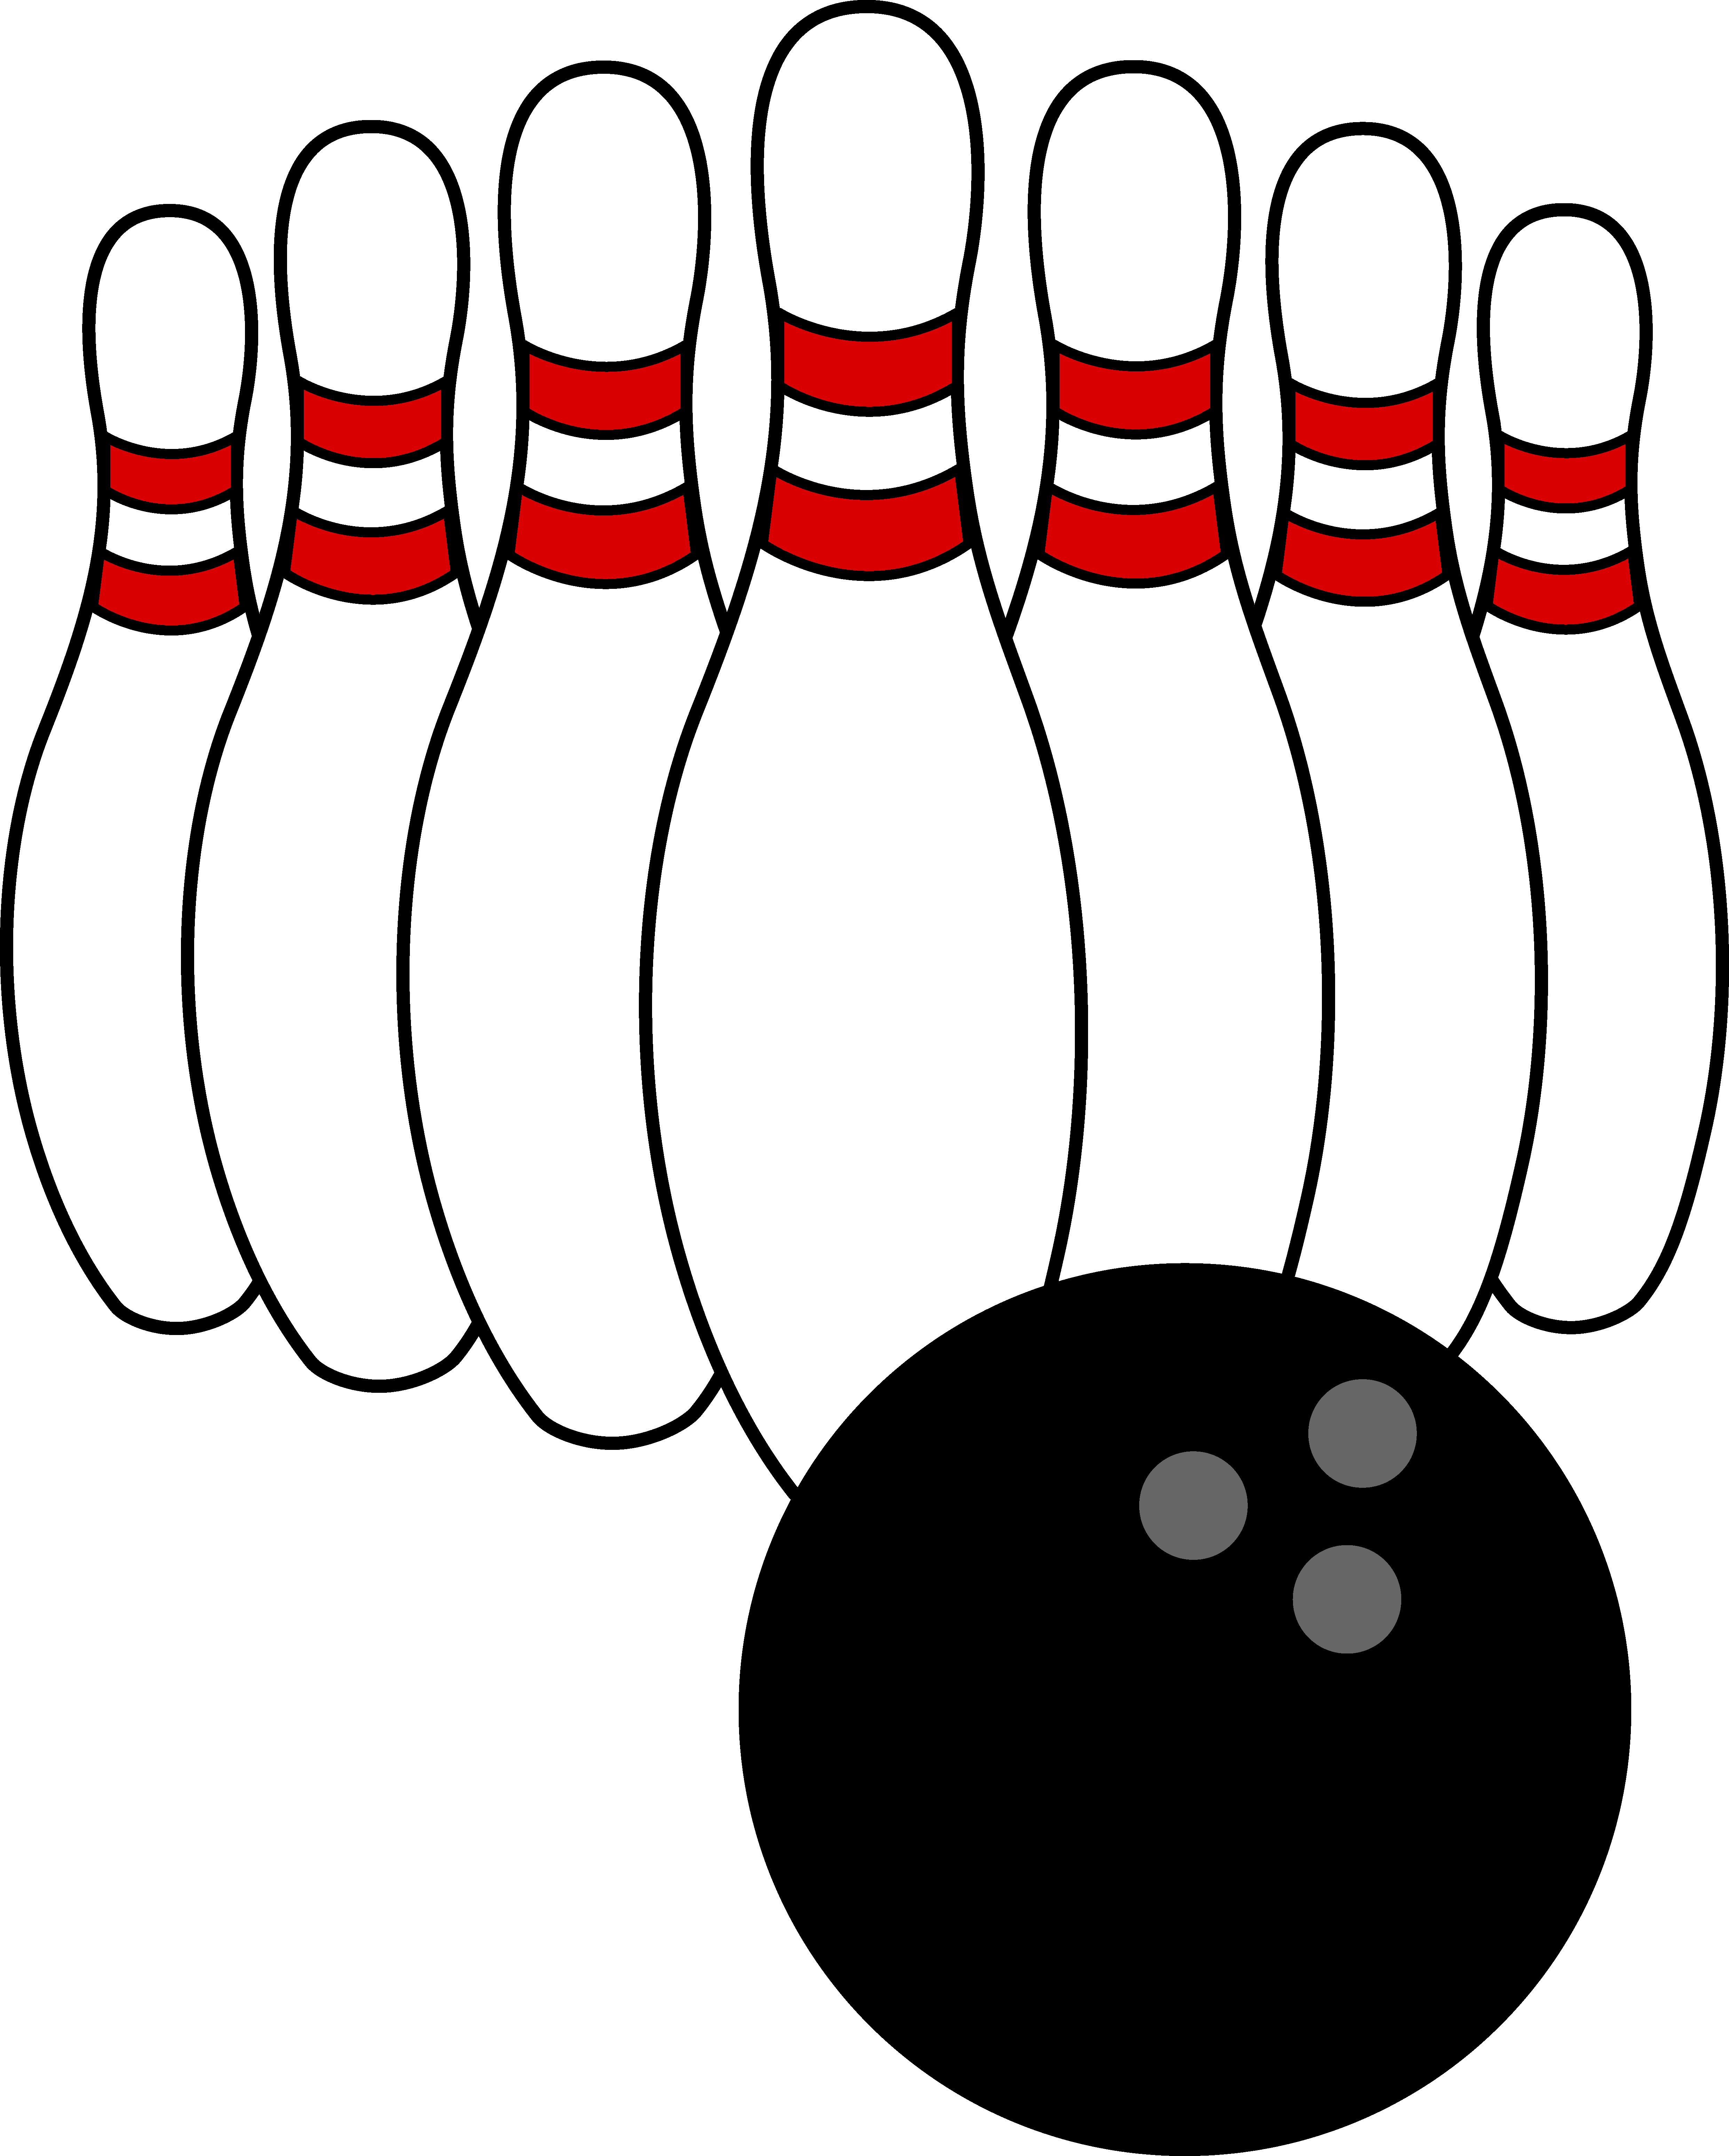 Bowling Ball and Pins - Free Clip Art